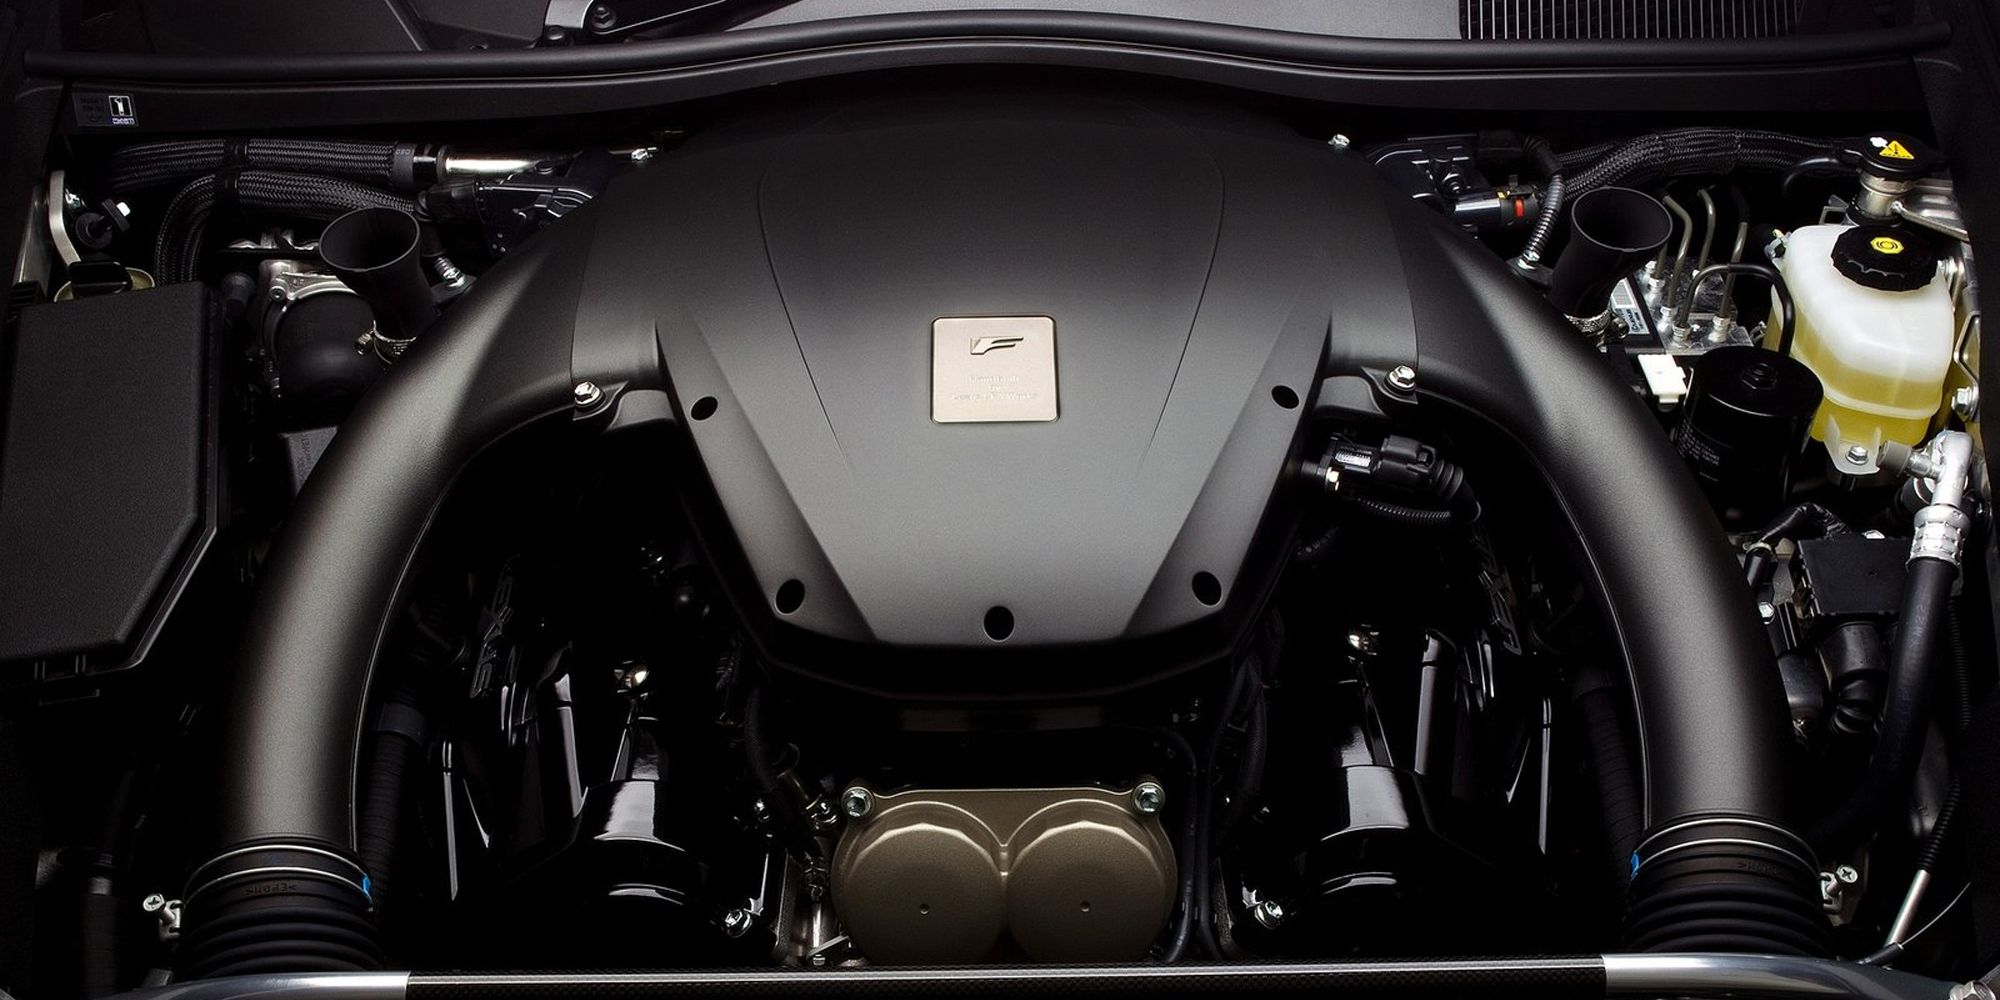 The engine in the Lexus LFA